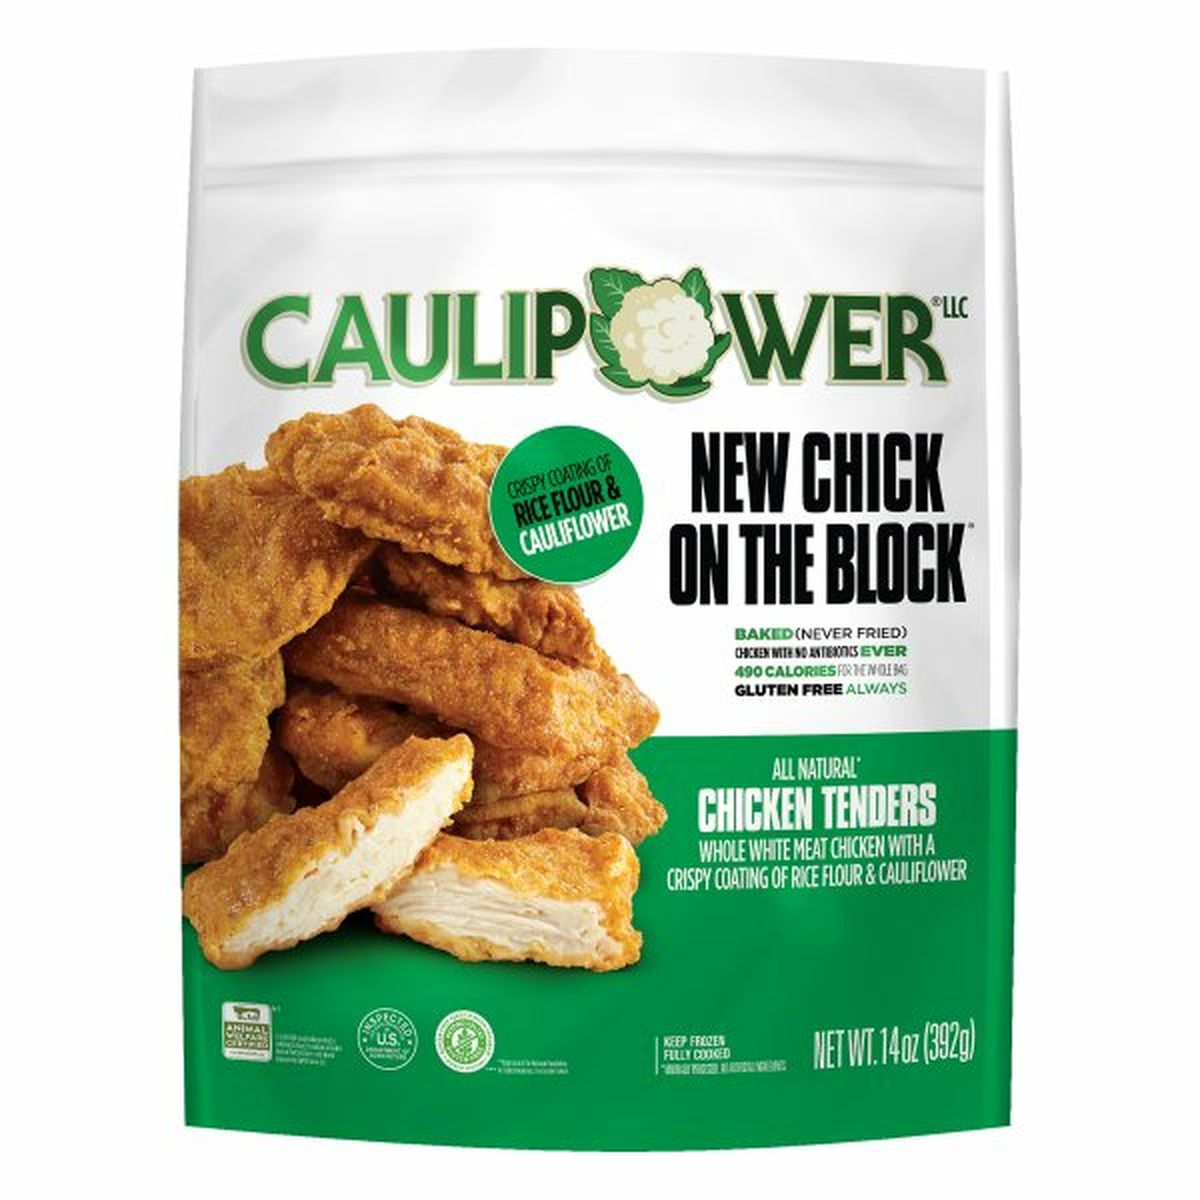 Calories in Caulipower Chicken Tenders